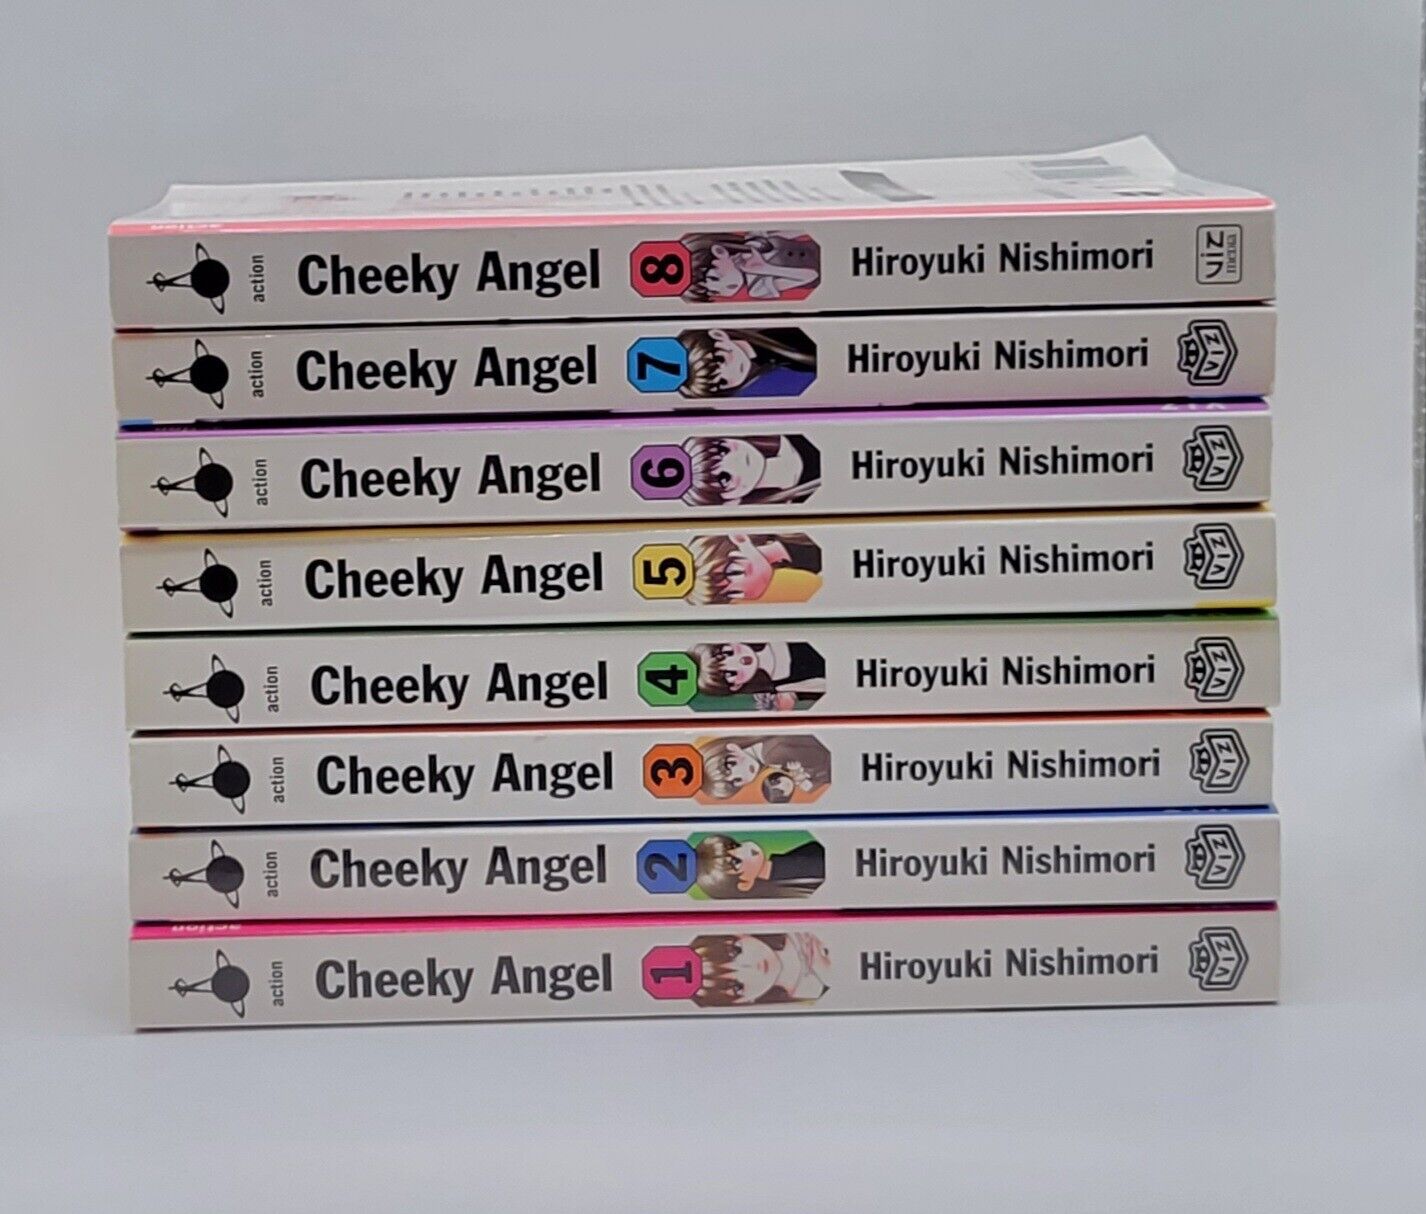 Cheeky Angel English Manga Volumes  1-8